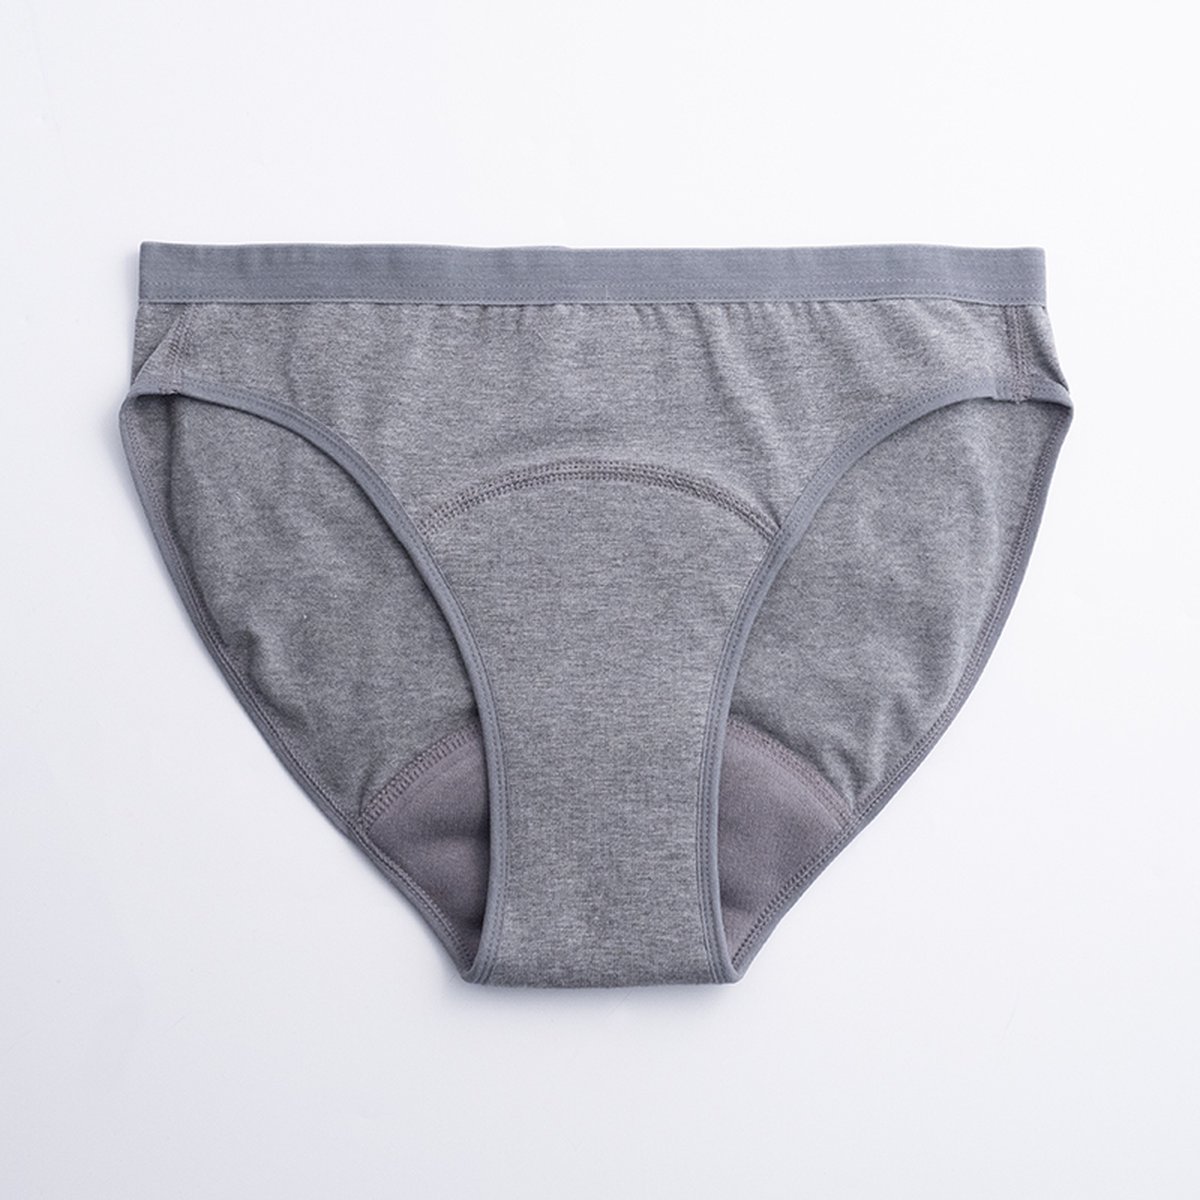 ImseVimse - Imse - menstruatieondergoed - Bikini model period underwear - matige menstruatie - M - eur 40/42 - grijs